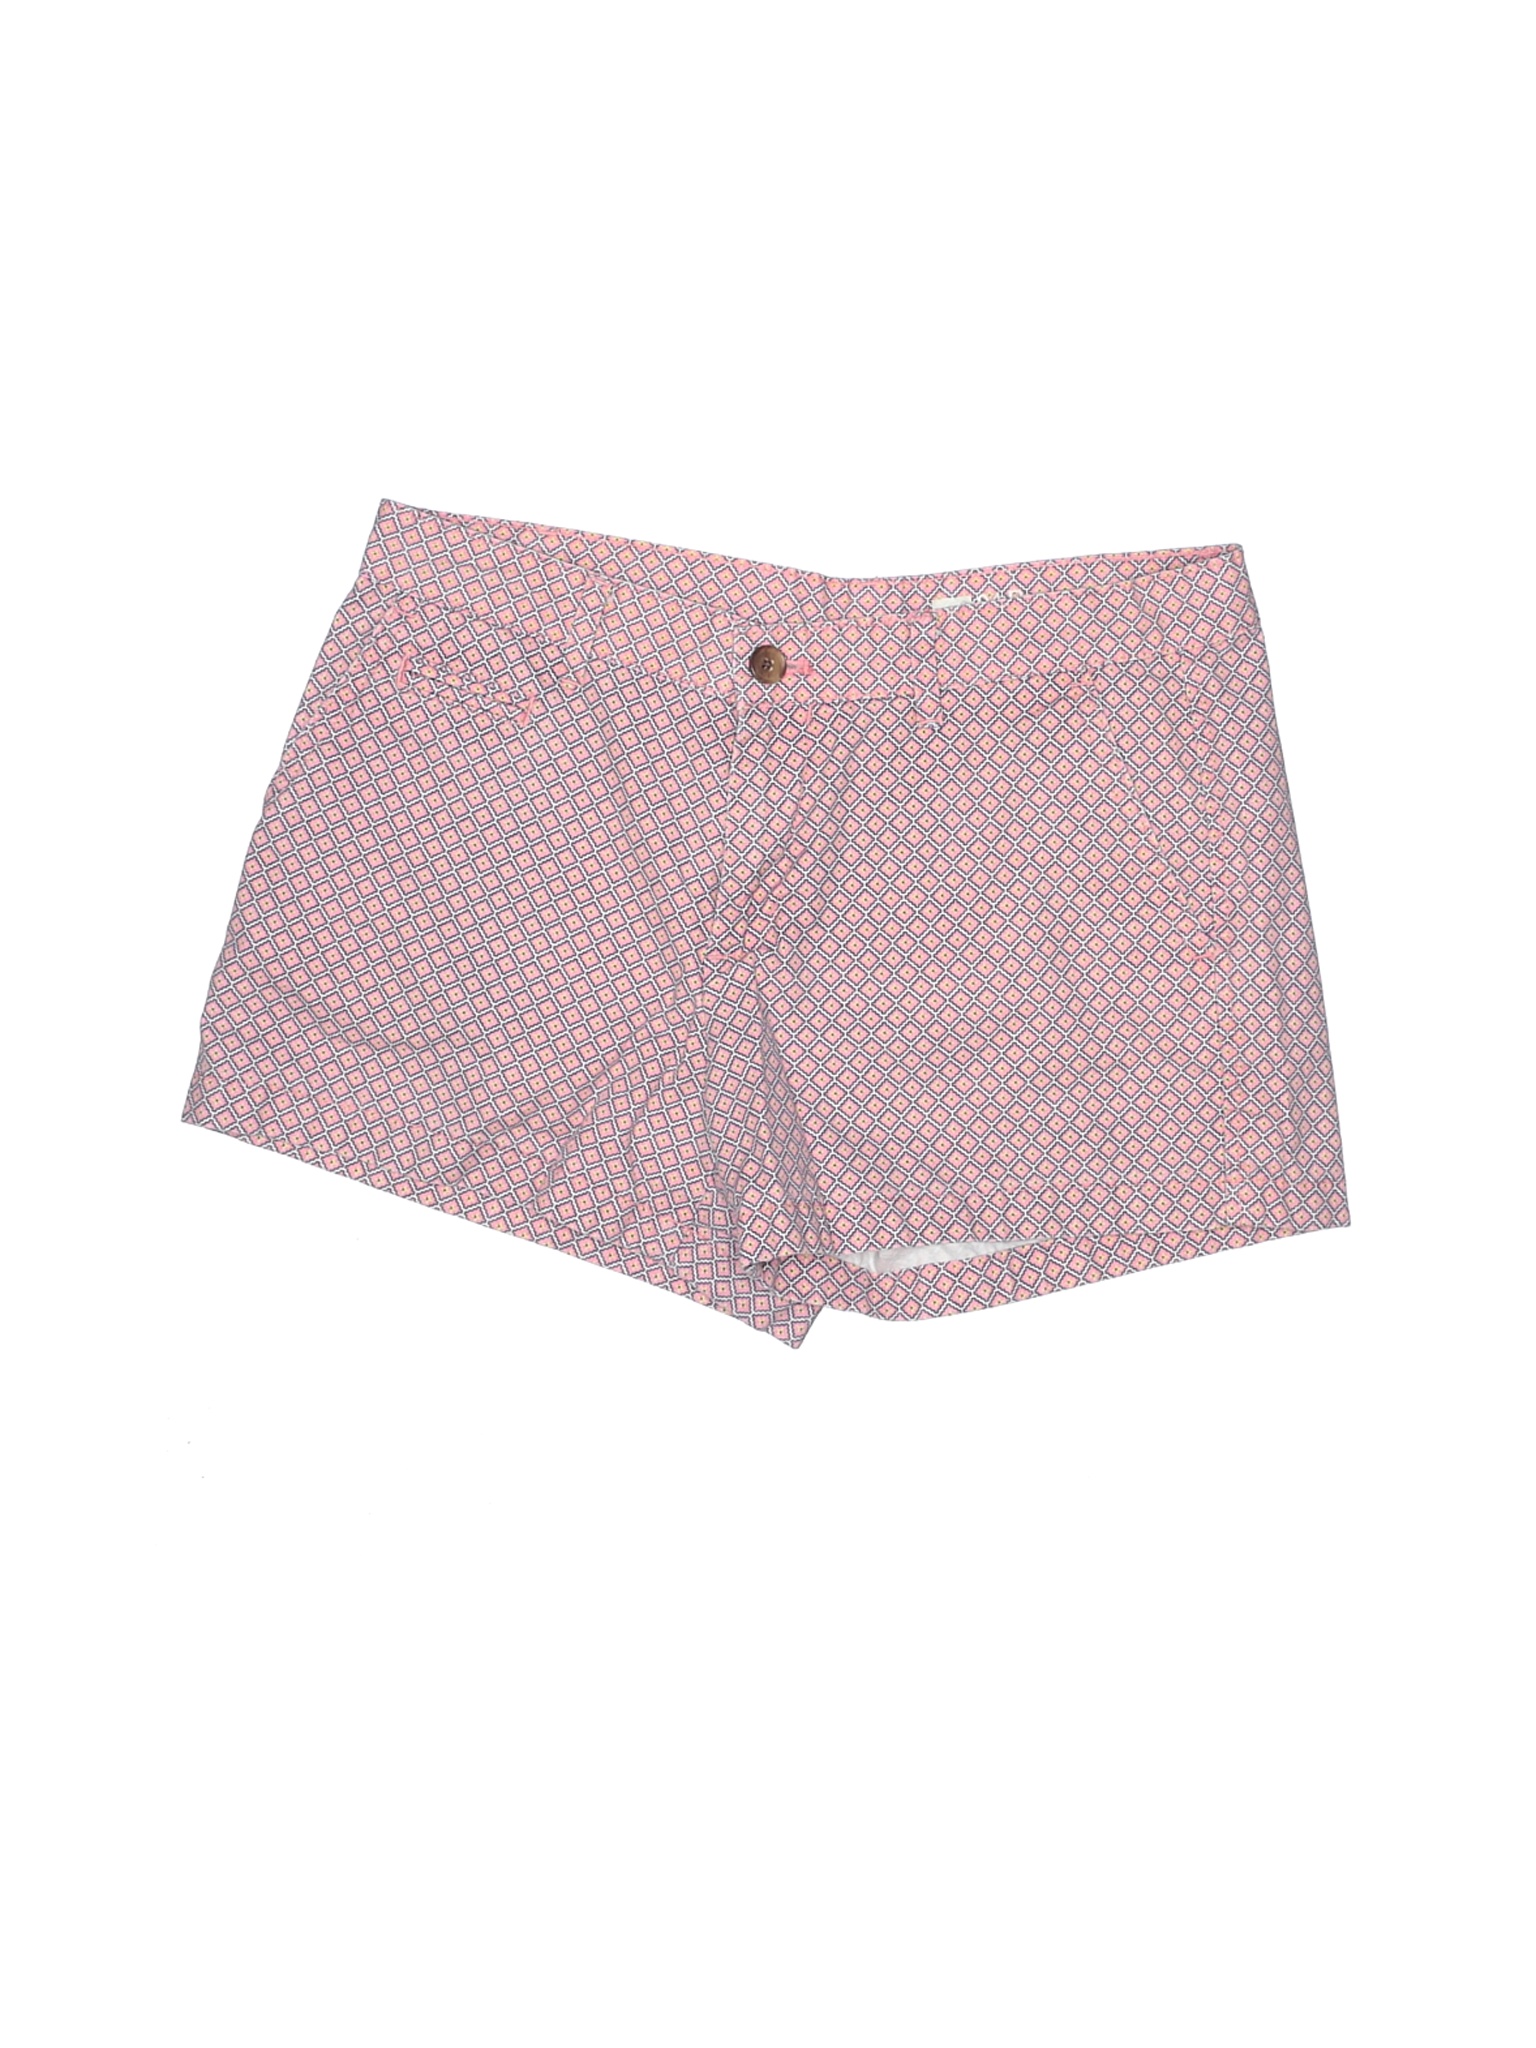 Gap Women Pink Shorts 4 | eBay